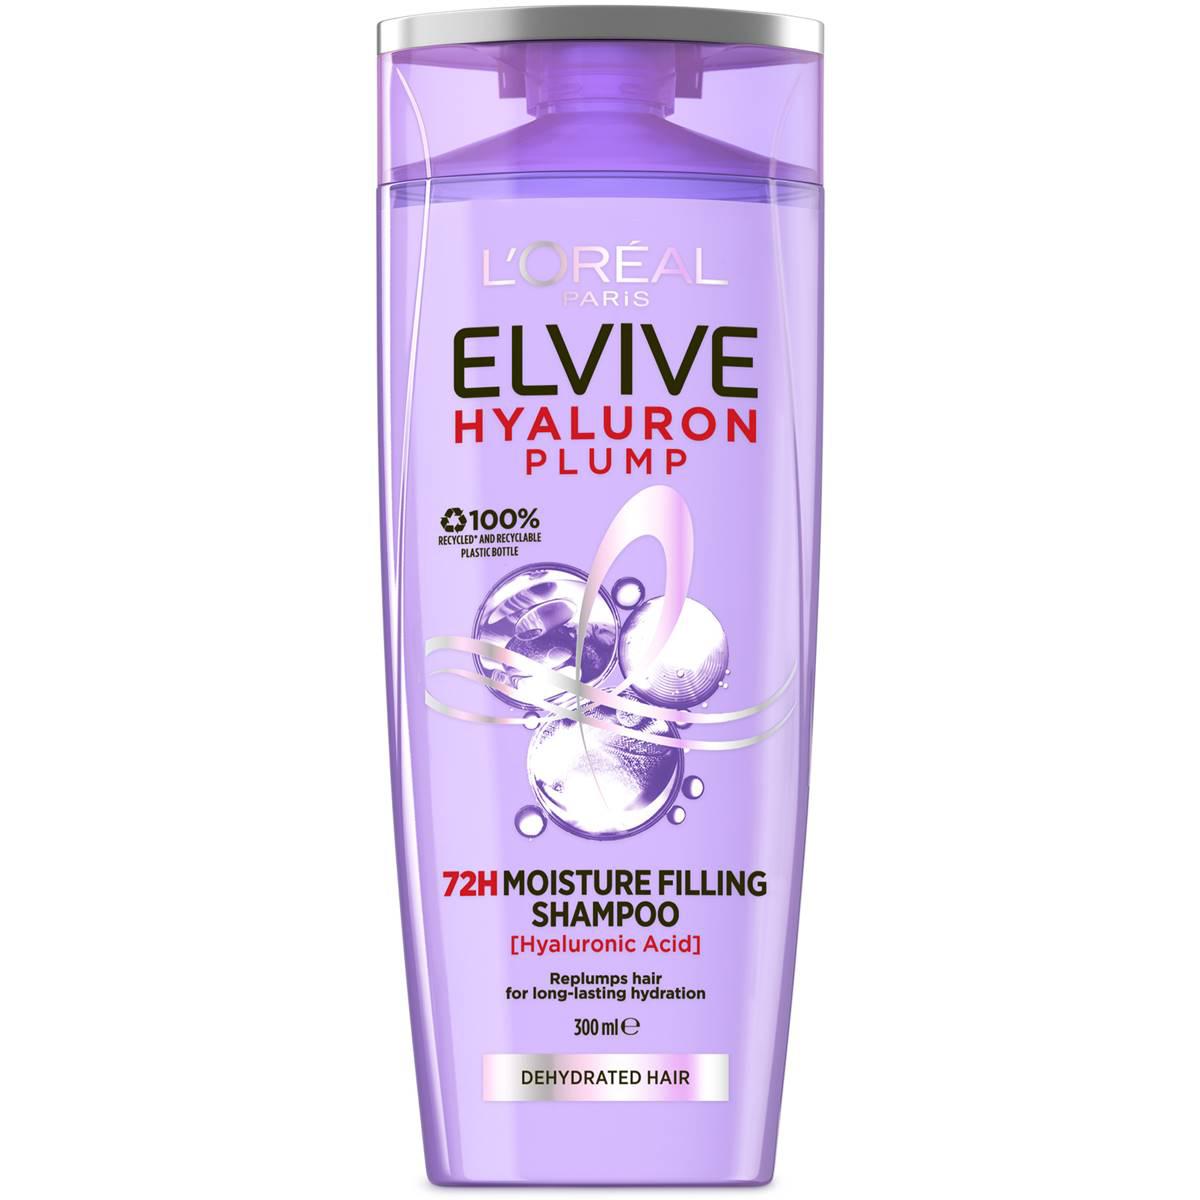 L'Oreal Elvive Hyaluron Plump Moisture Filling Shampoo 300ml